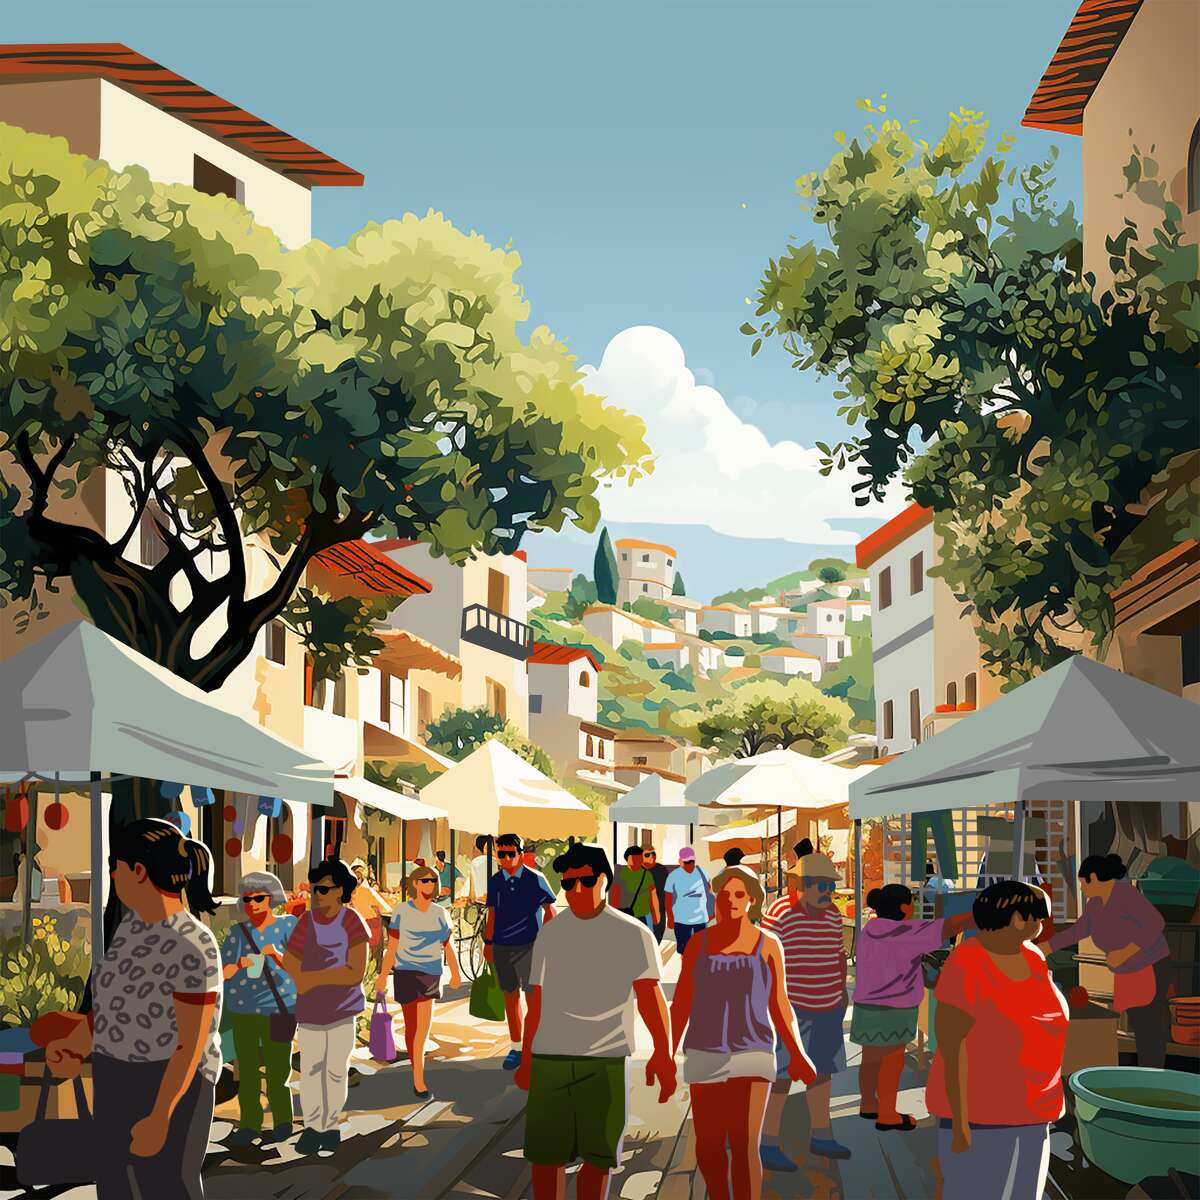 An artistic illustration shows people walking through a bustling urban market.